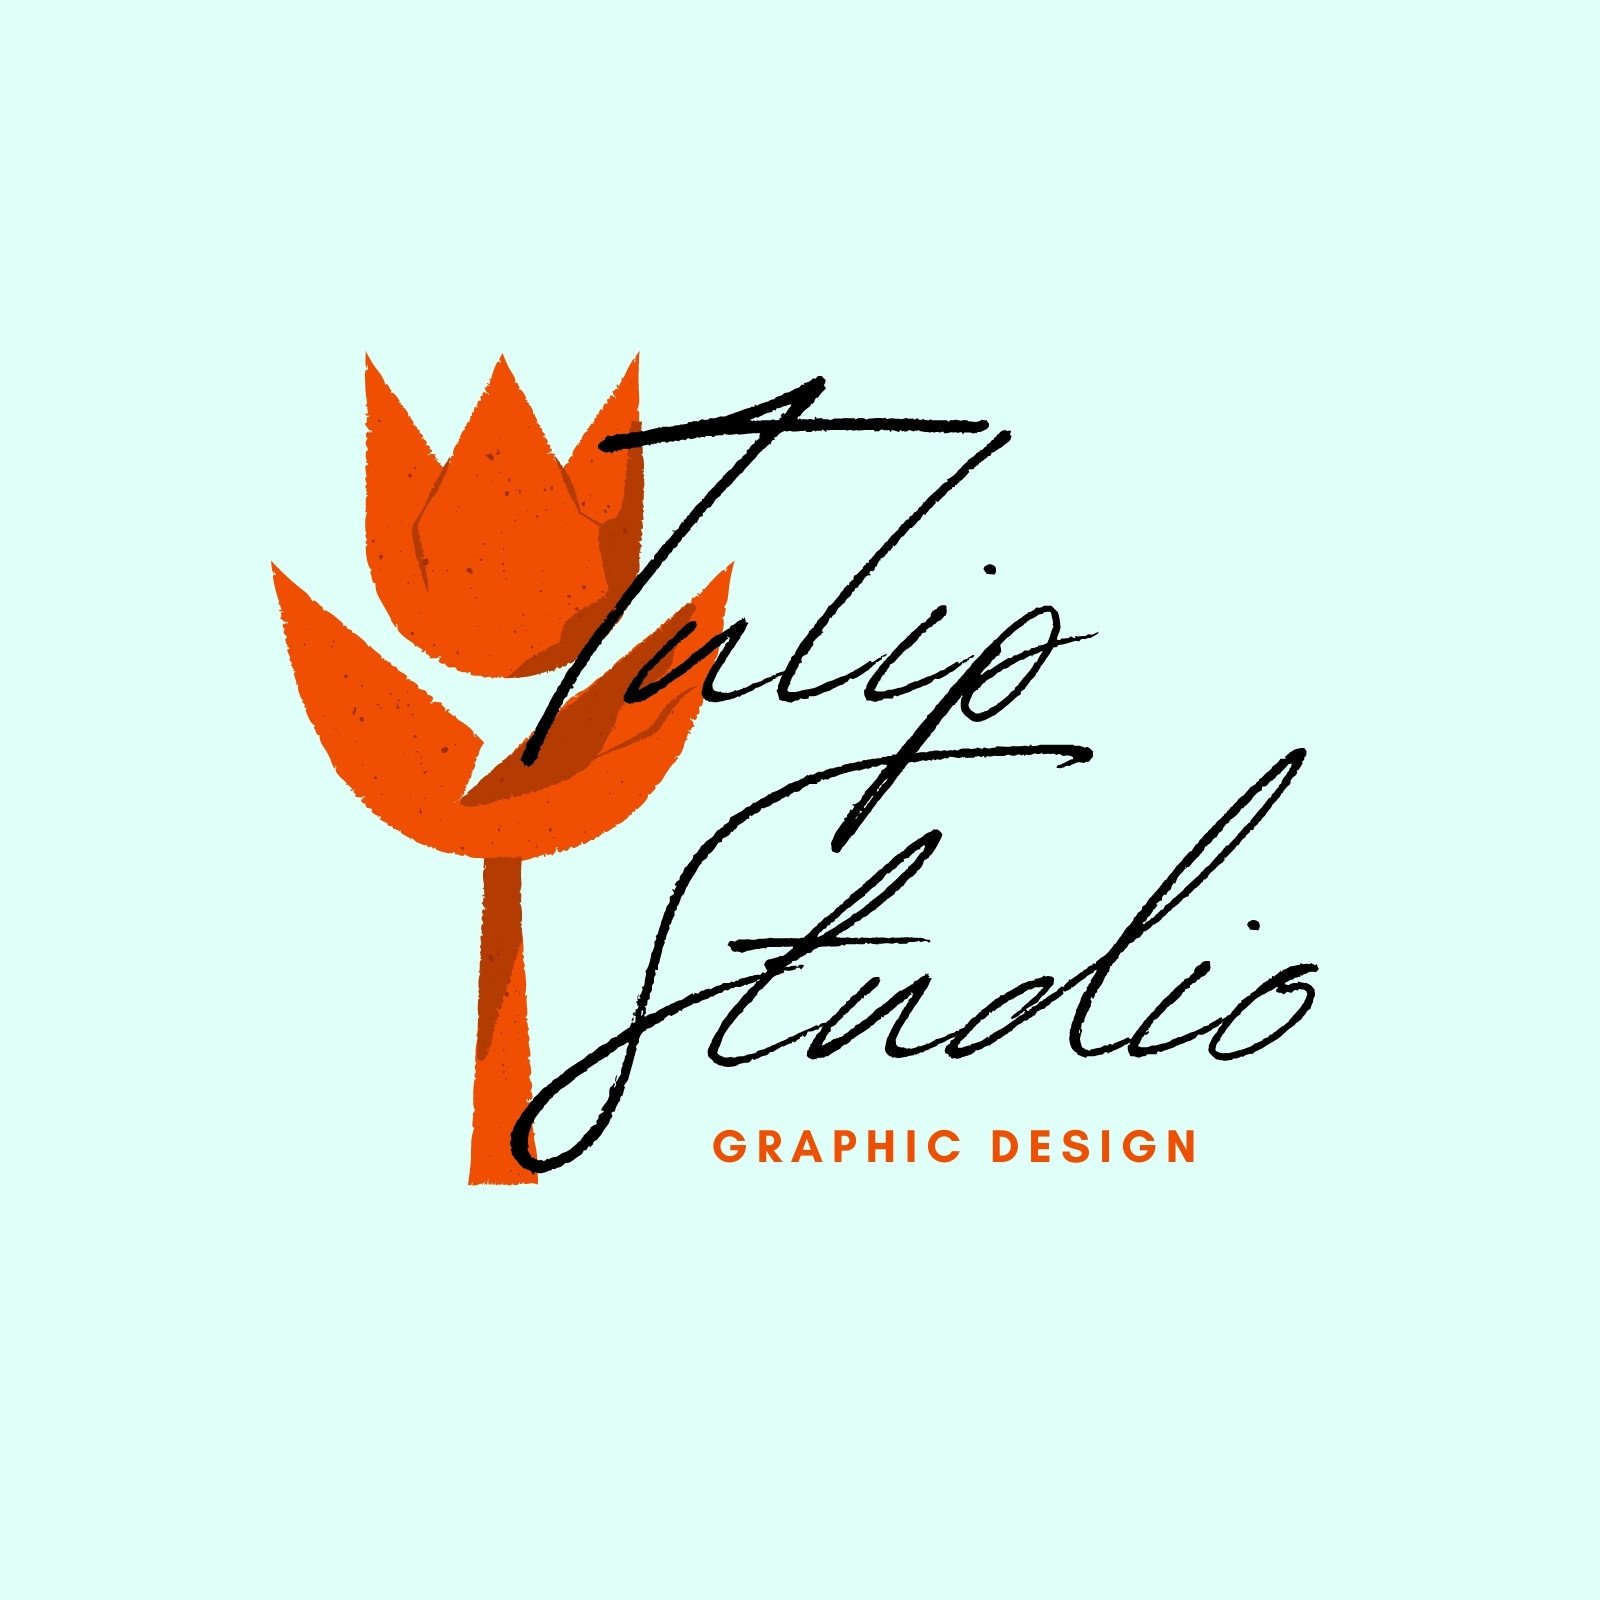 graphic design firm logos